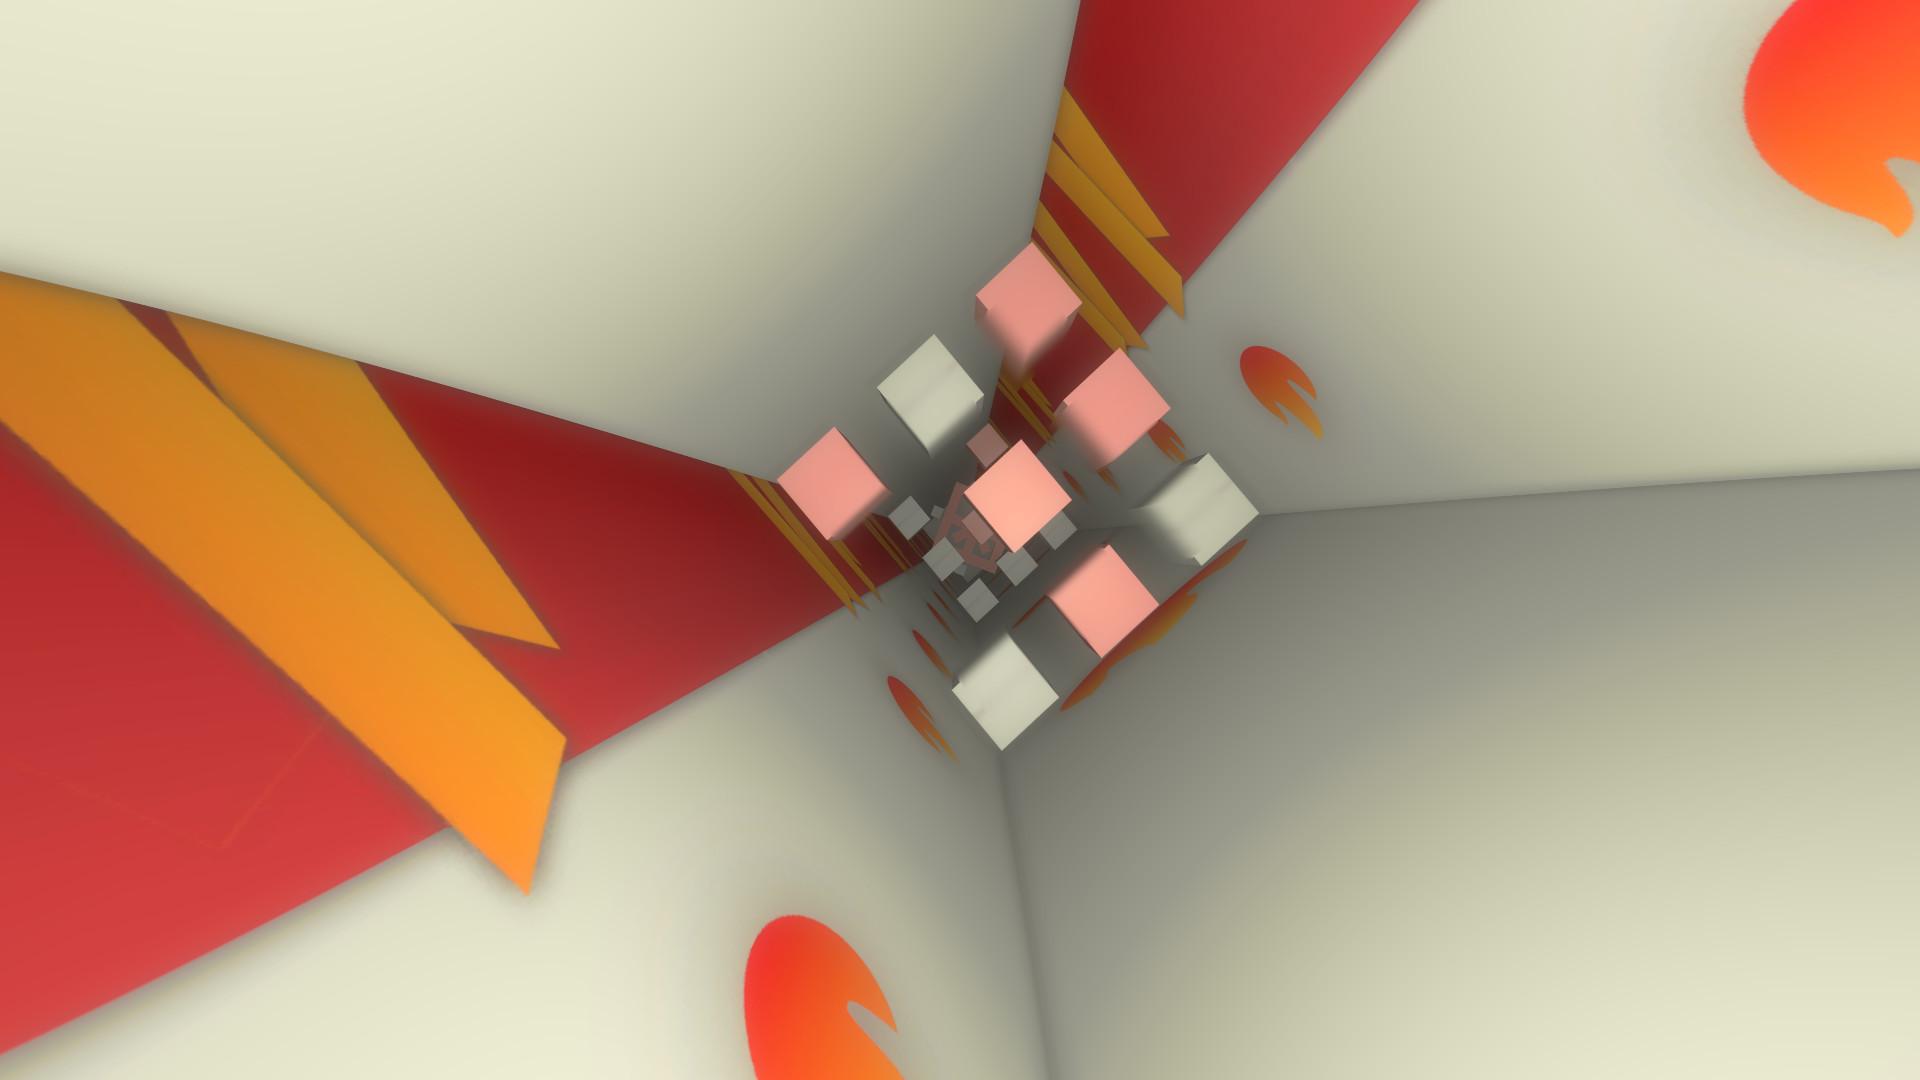 Screenshot №3 from game Approaching Blocks